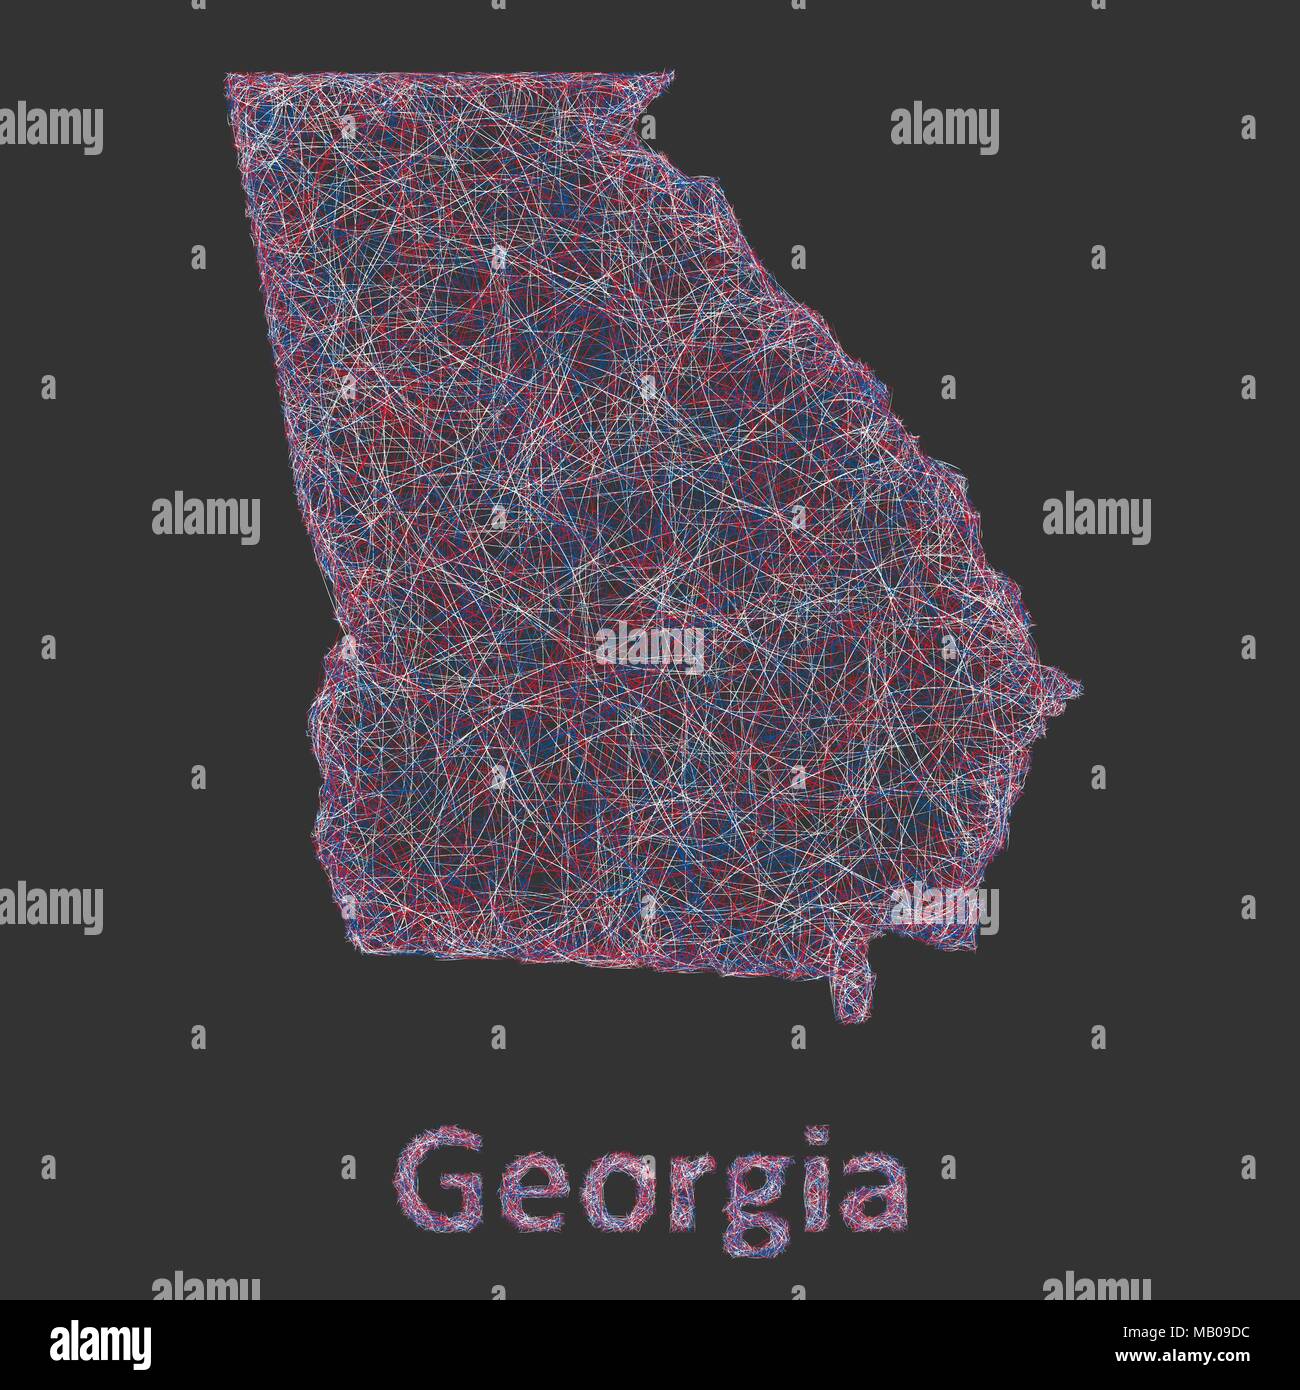 Georgia line art map Stock Vector